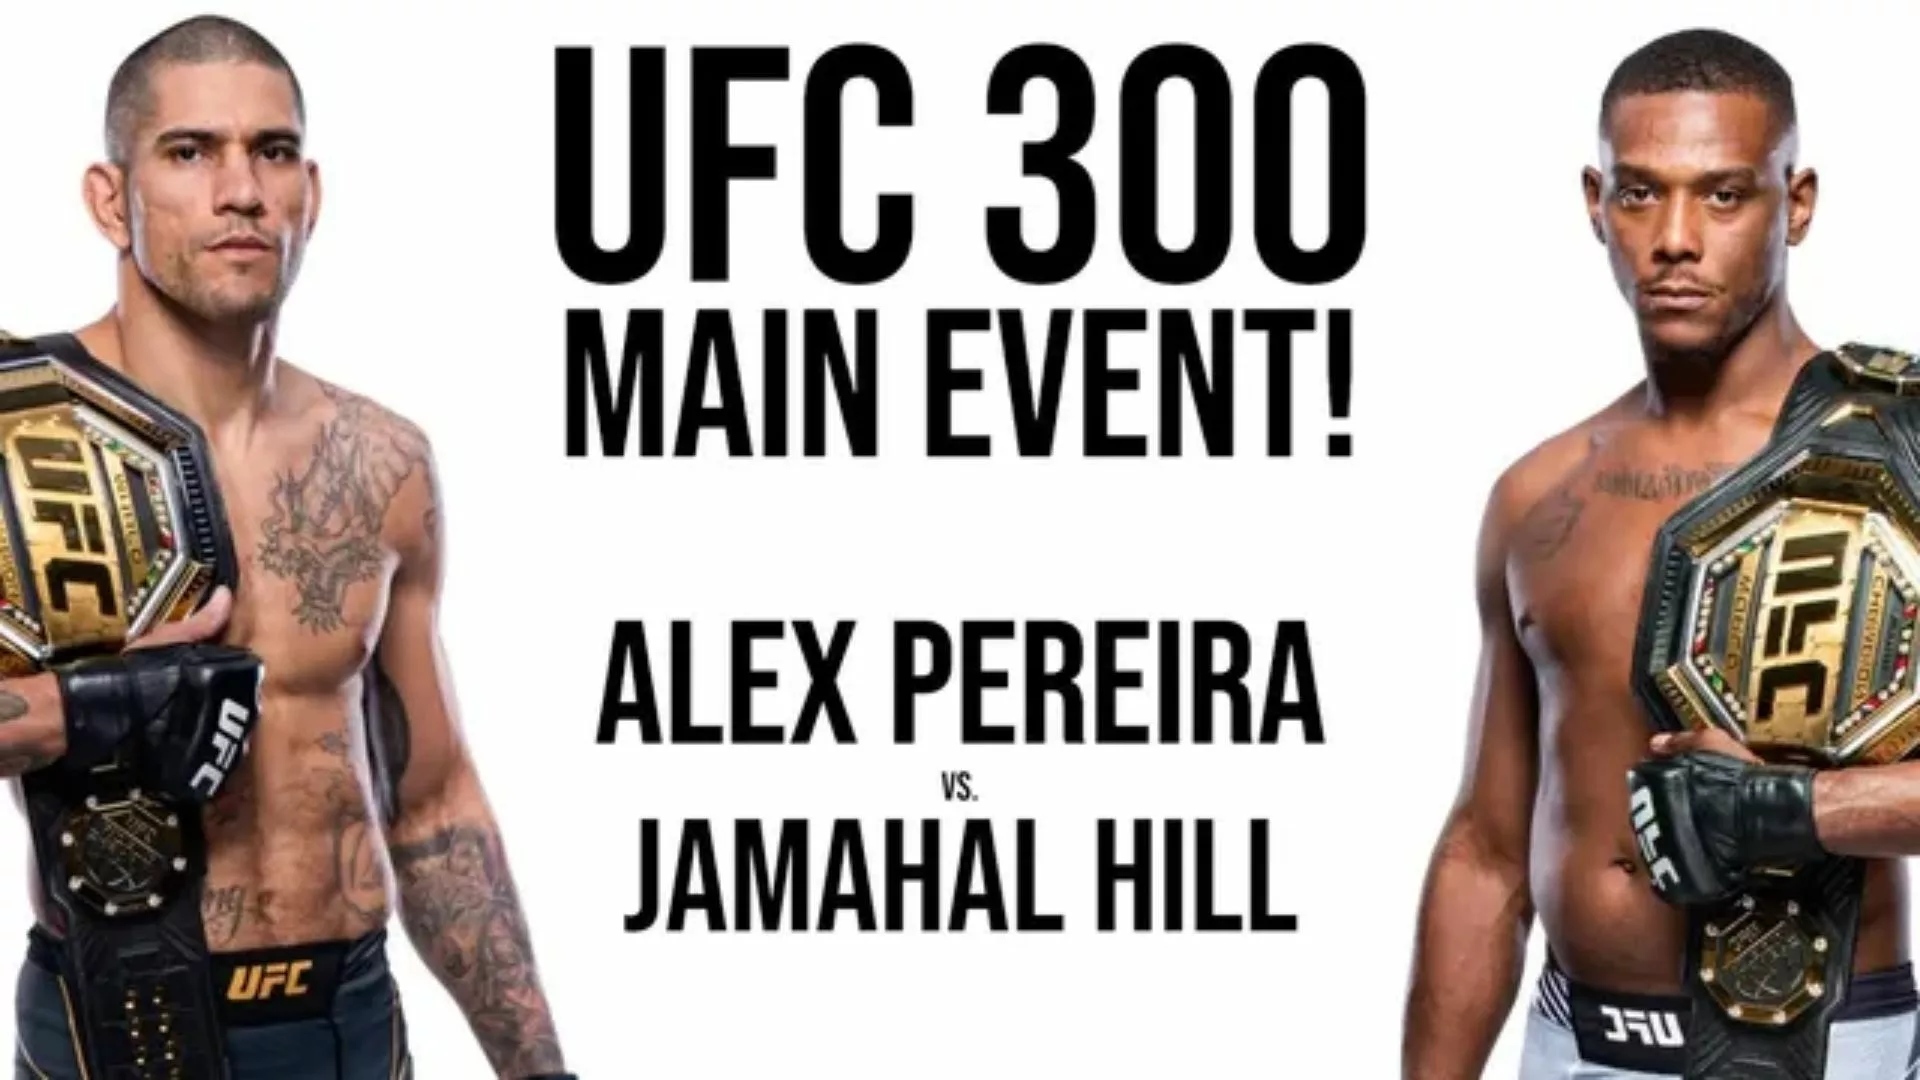 Promo Image of Alex Pereira vs Jamahal Hill